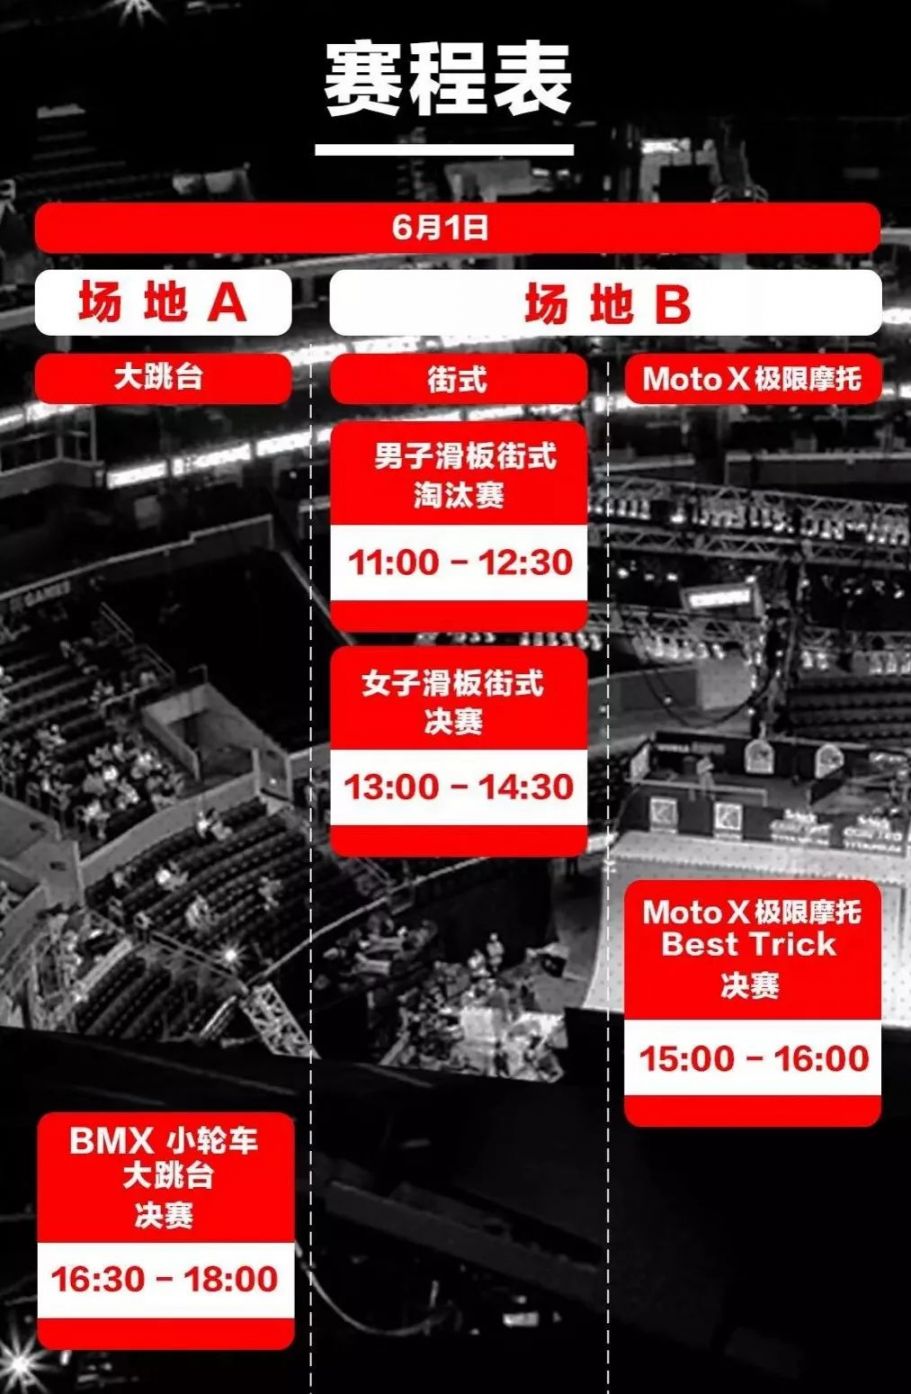 xgame 极限运动会2019上海门票价格 购票方式